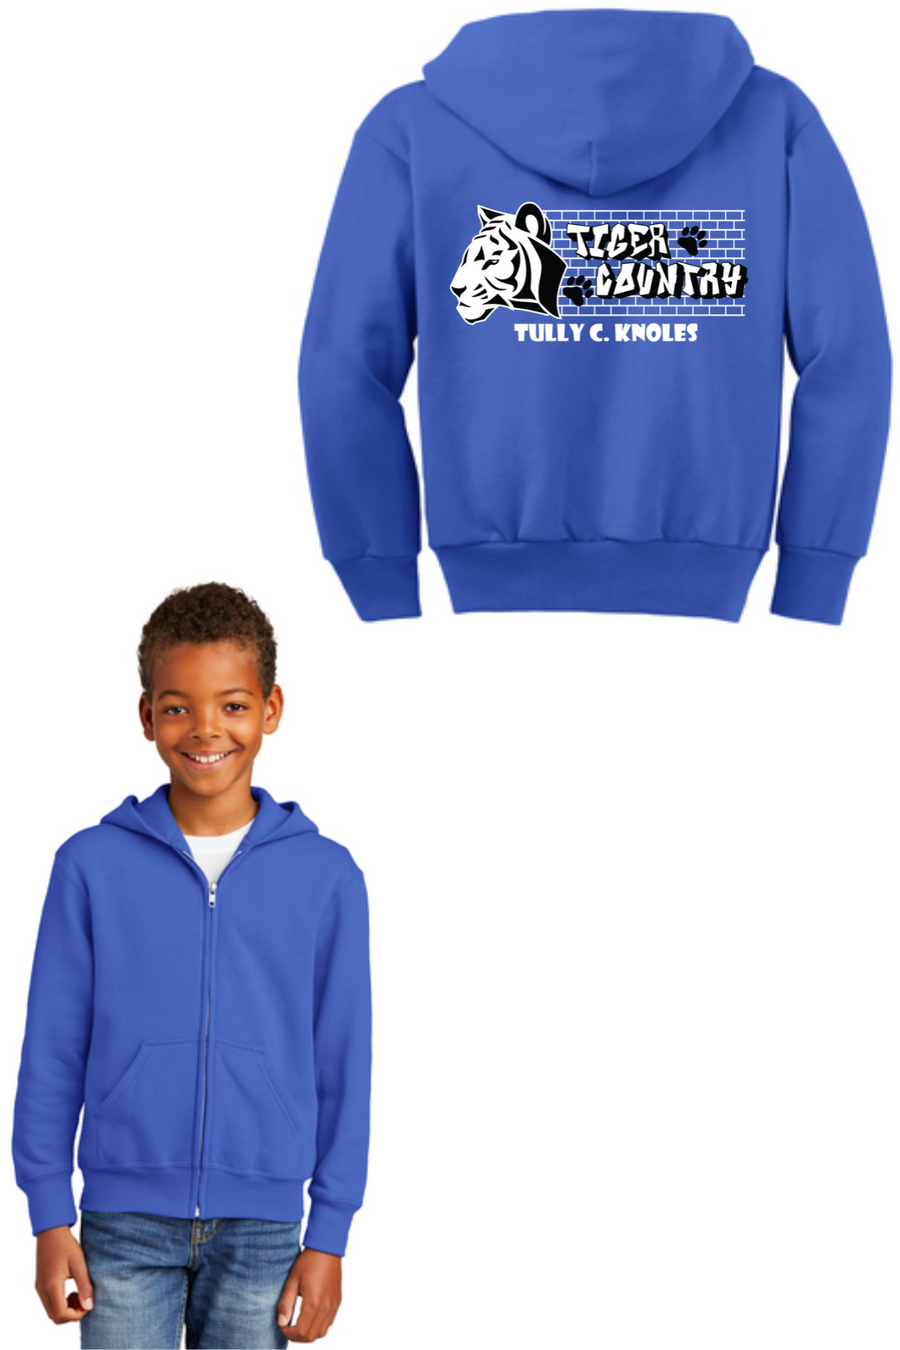 Tully C Knoles - Spirit Wear 23/24 On-Demand-Unisex Full-Zip Hooded Sweatshirt Tiger Country Logo